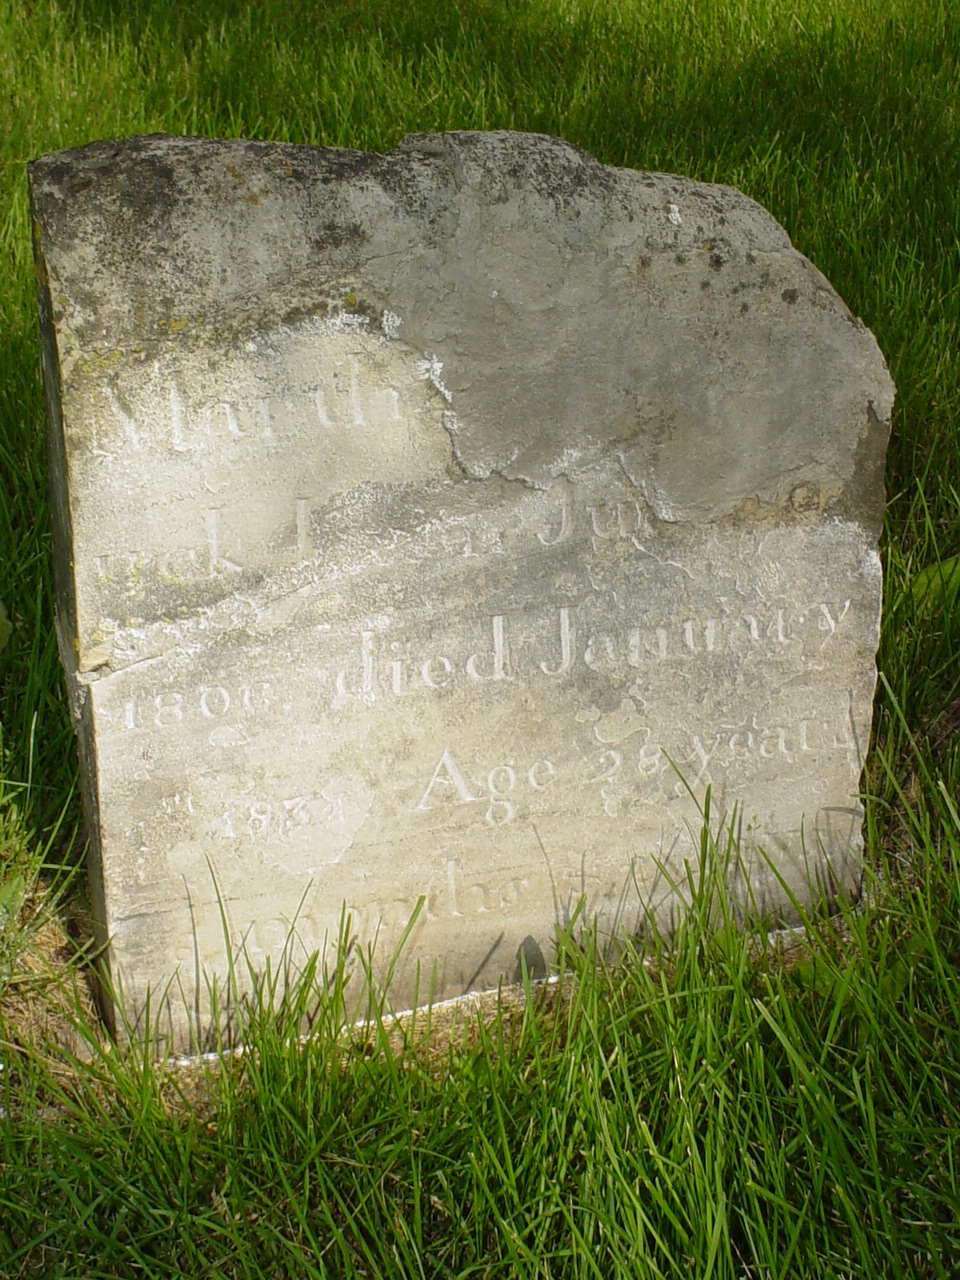  Martha Reynolds Clatterbuck Headstone Photo, Old Prospect Methodist Cemetery, Callaway County genealogy